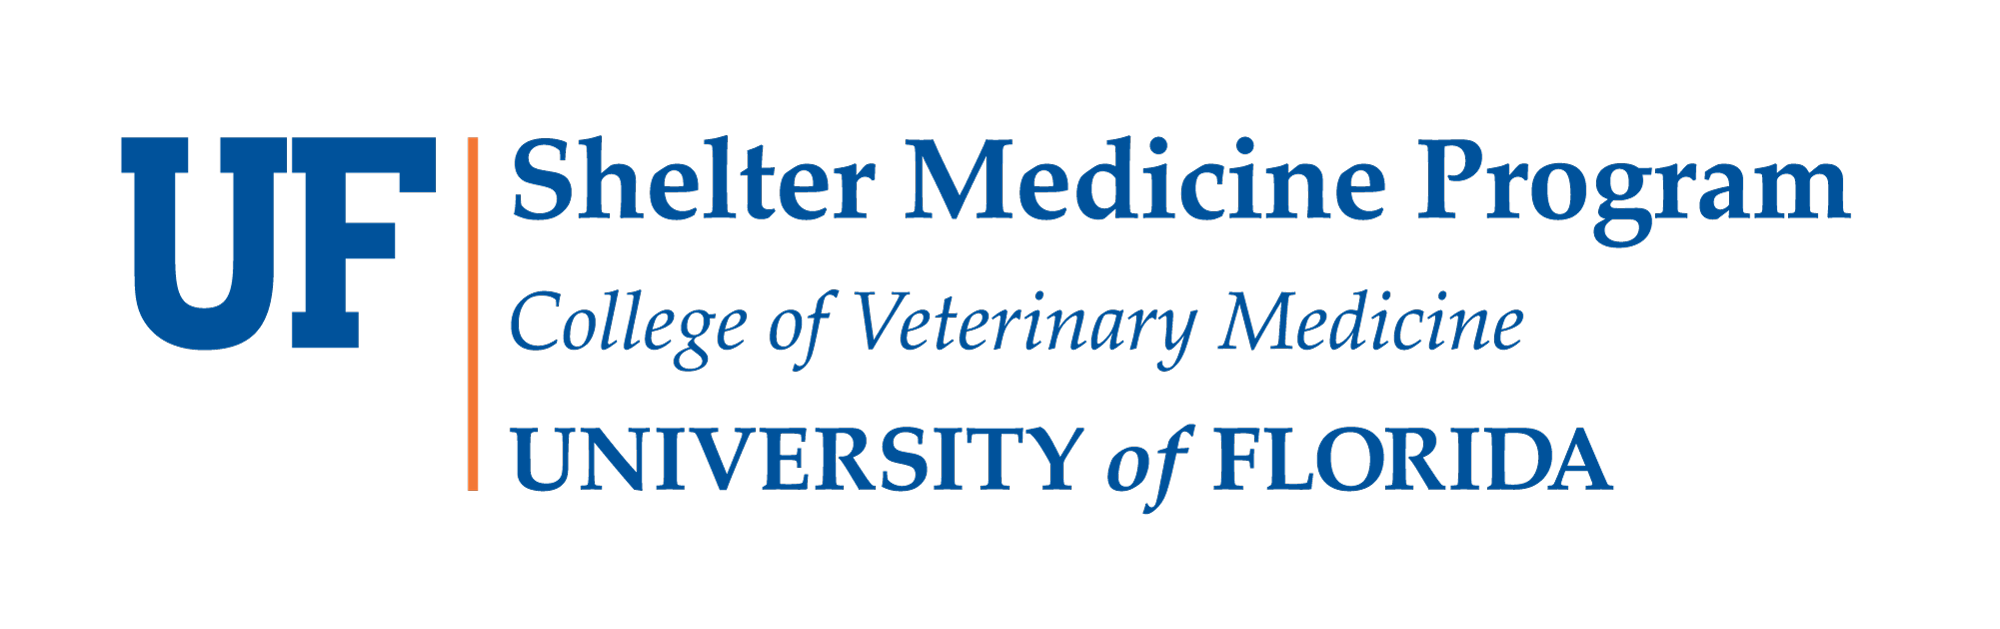 University of Florida, Shelter Medicine Program